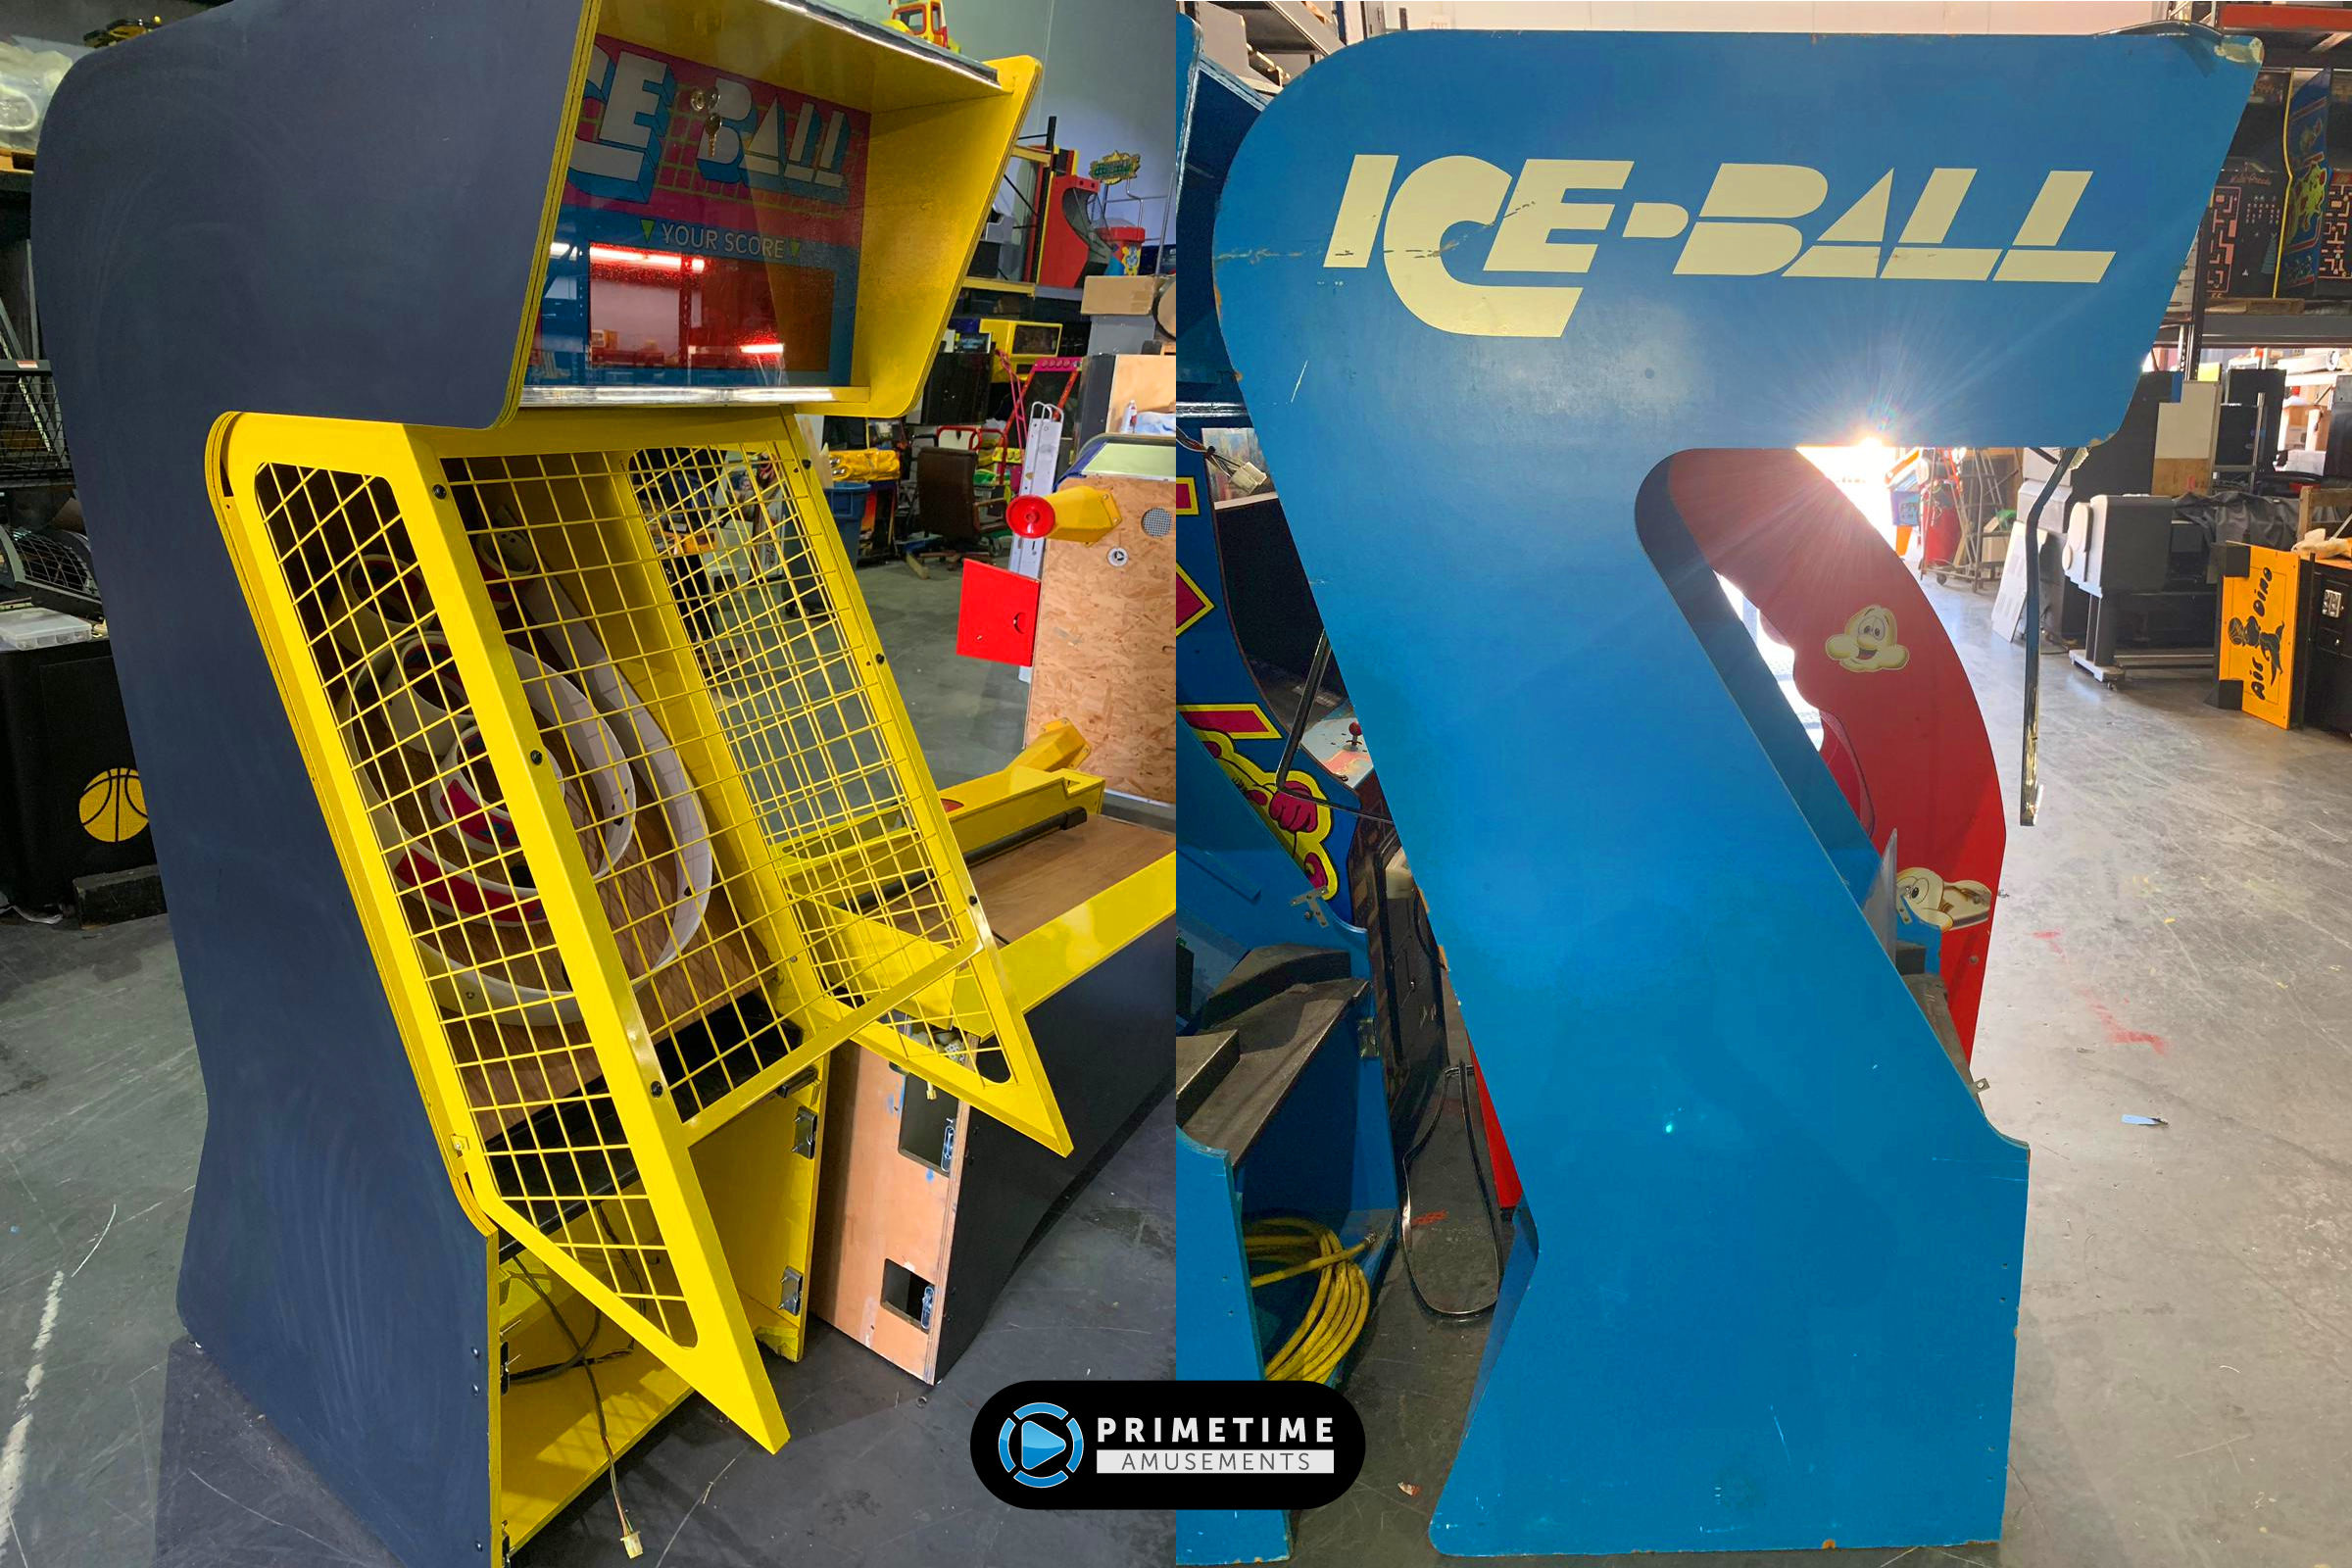 DOODLE JUMP BY ICE - RAW THRILLS TICKET REDEMPTION ARCADE GAME